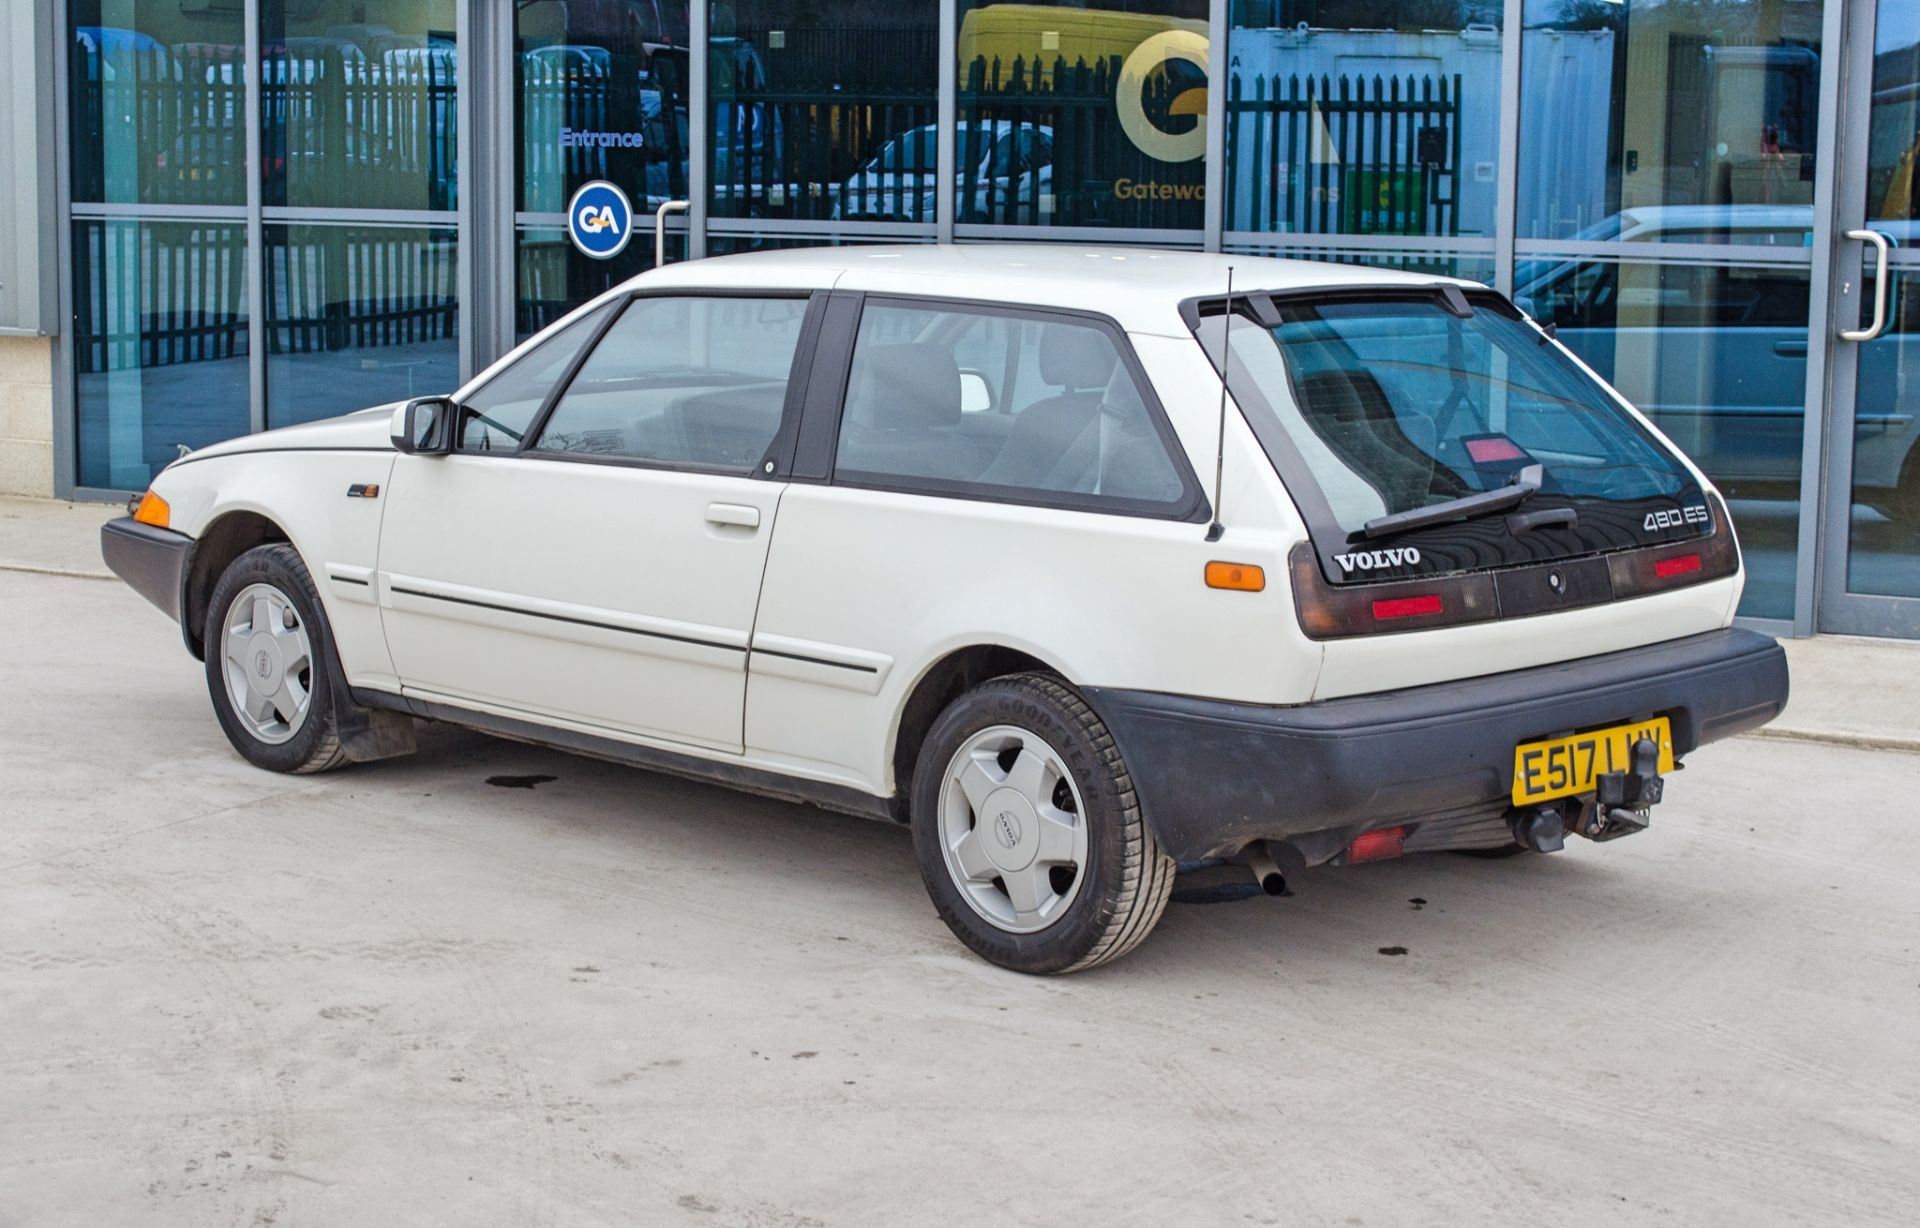 1987 Volvo 480 ES 1721CC 3 door hatchback Guide; £2,000 to £3,000  Registration: E517LHV Chassis: - Image 8 of 56